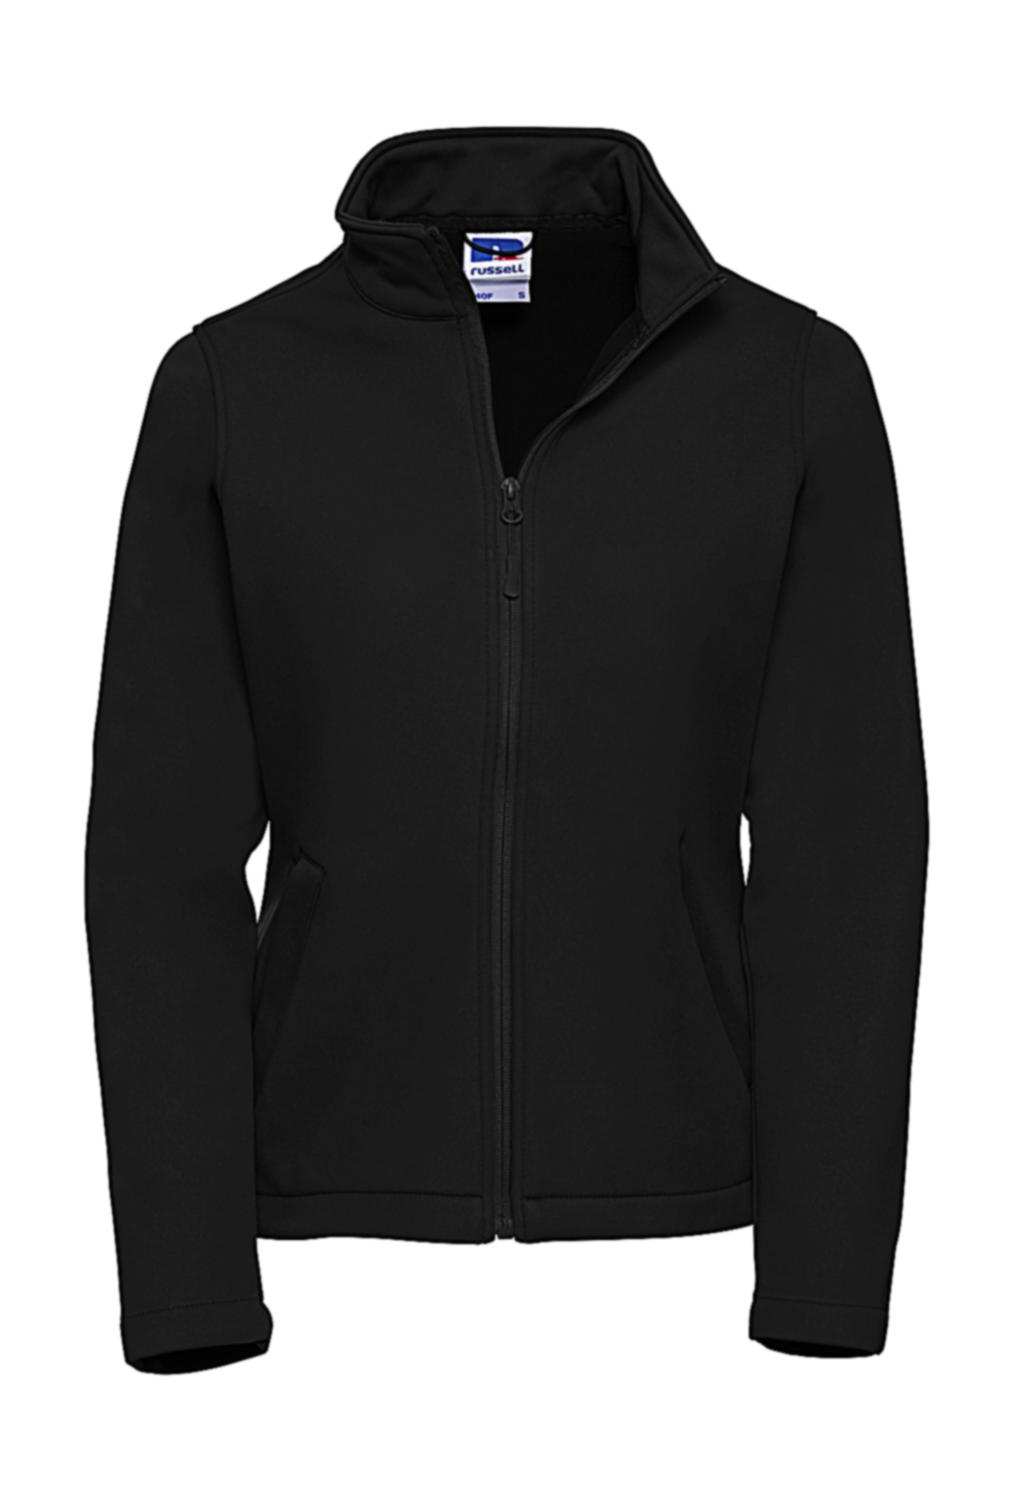  Ladies Smart Softshell Jacket in Farbe Black